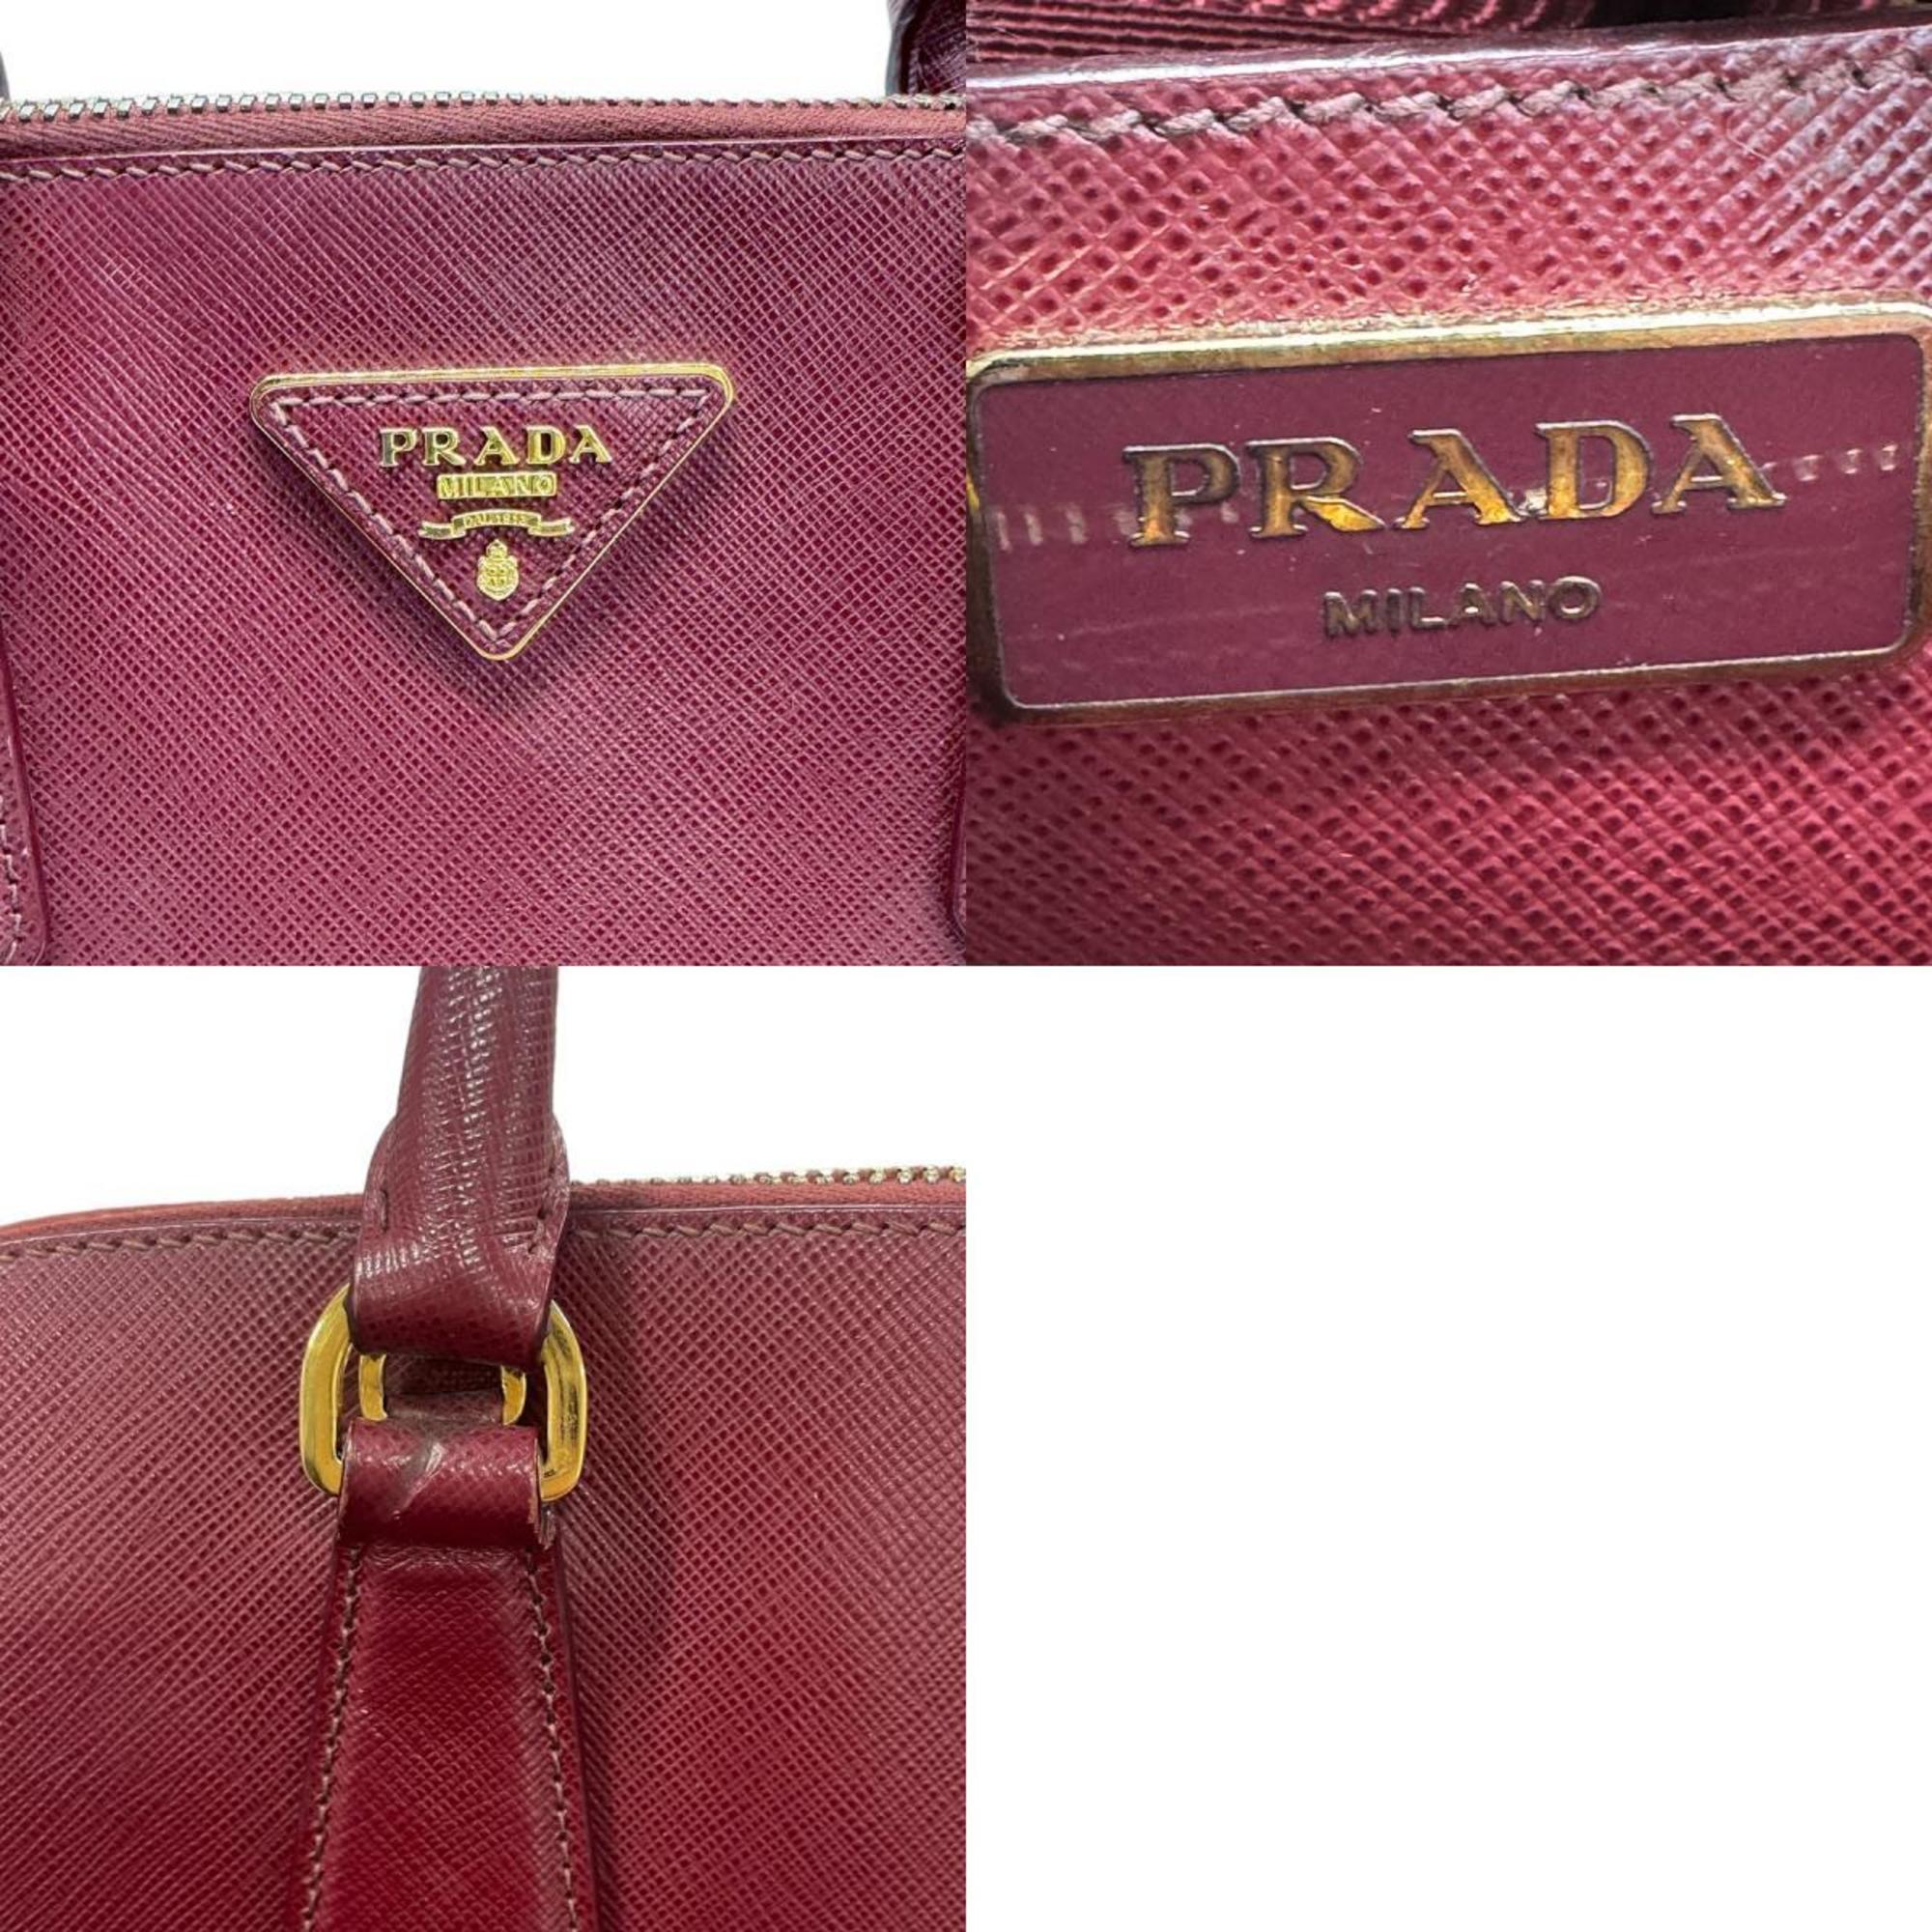 PRADA handbag shoulder bag leather wine red women's z1025